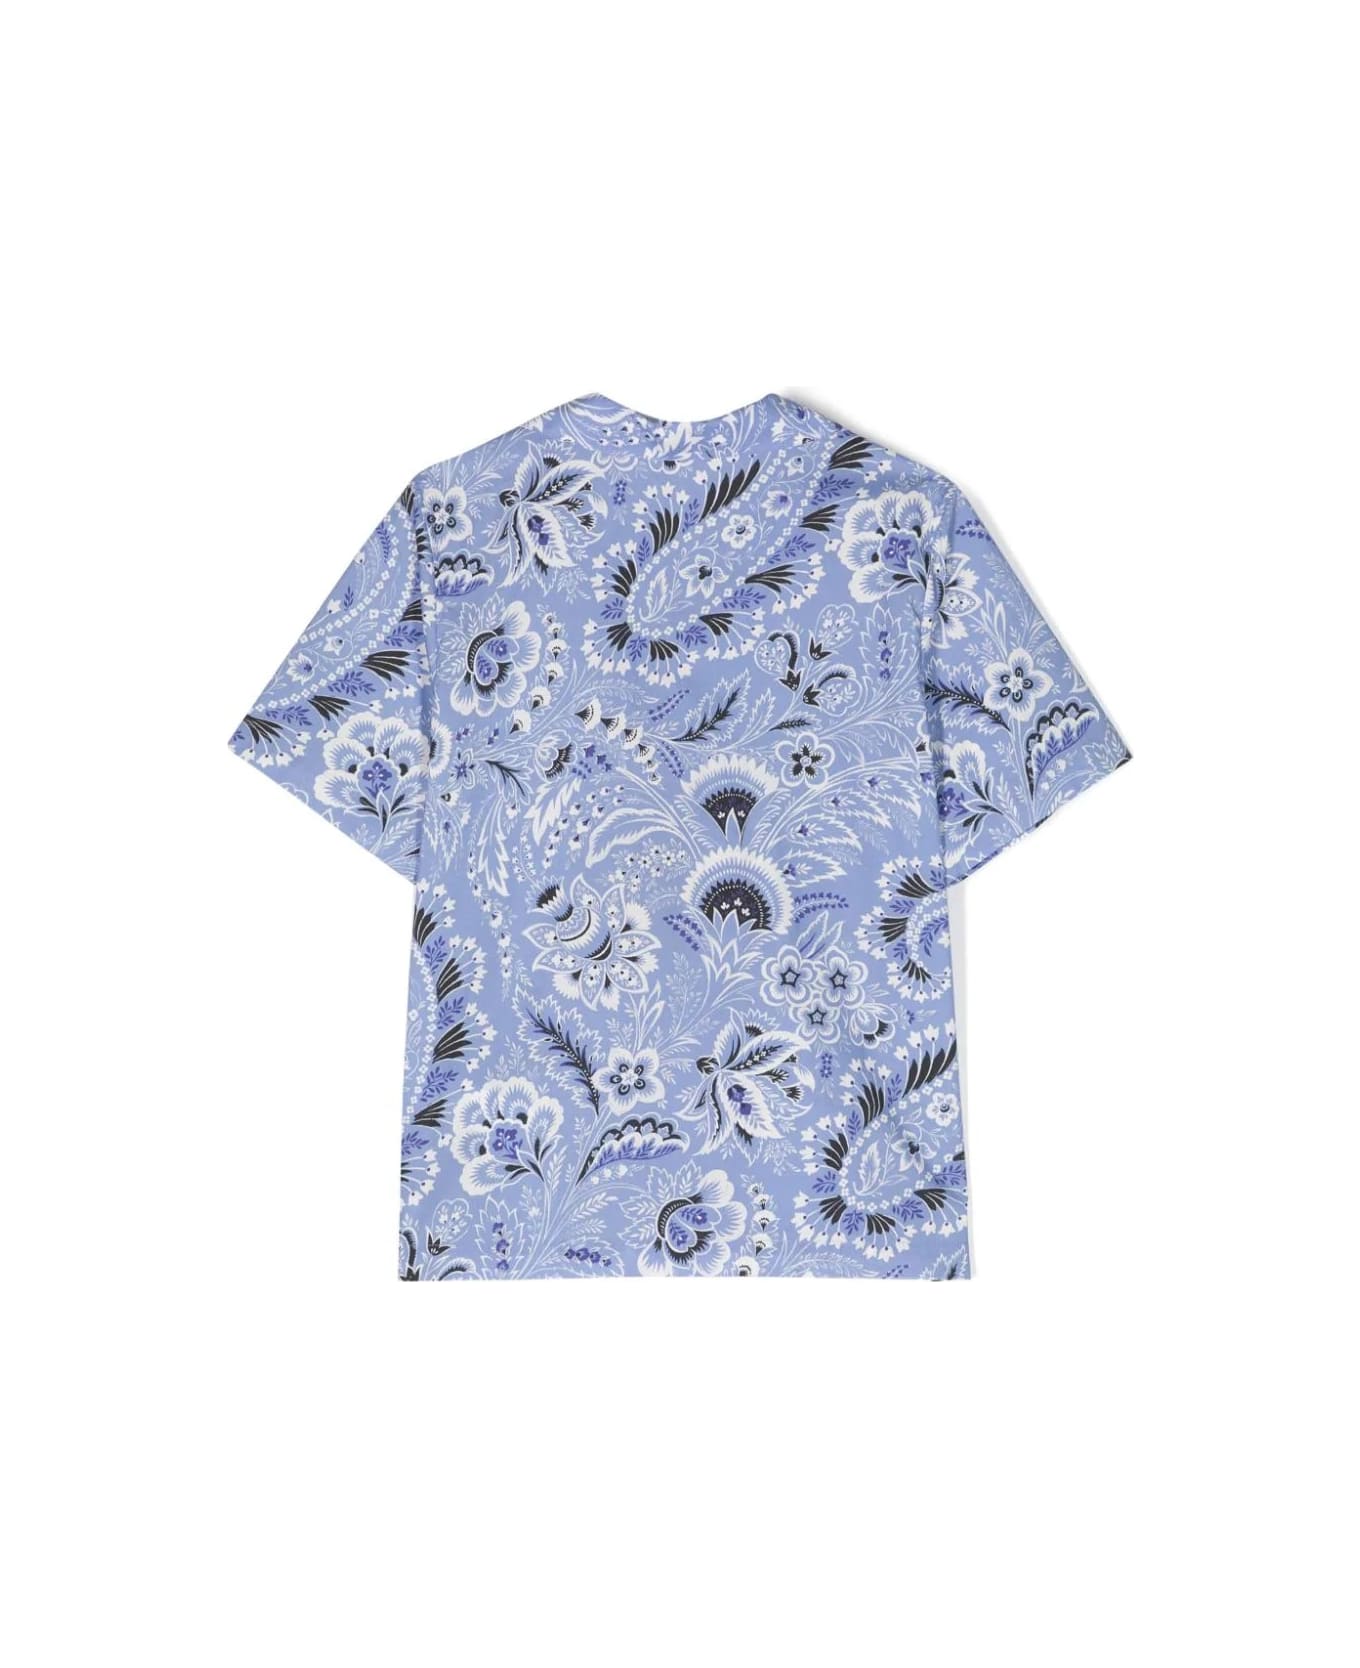 Etro Light Blue Bowling Shirt With Paisley Motif - Blue